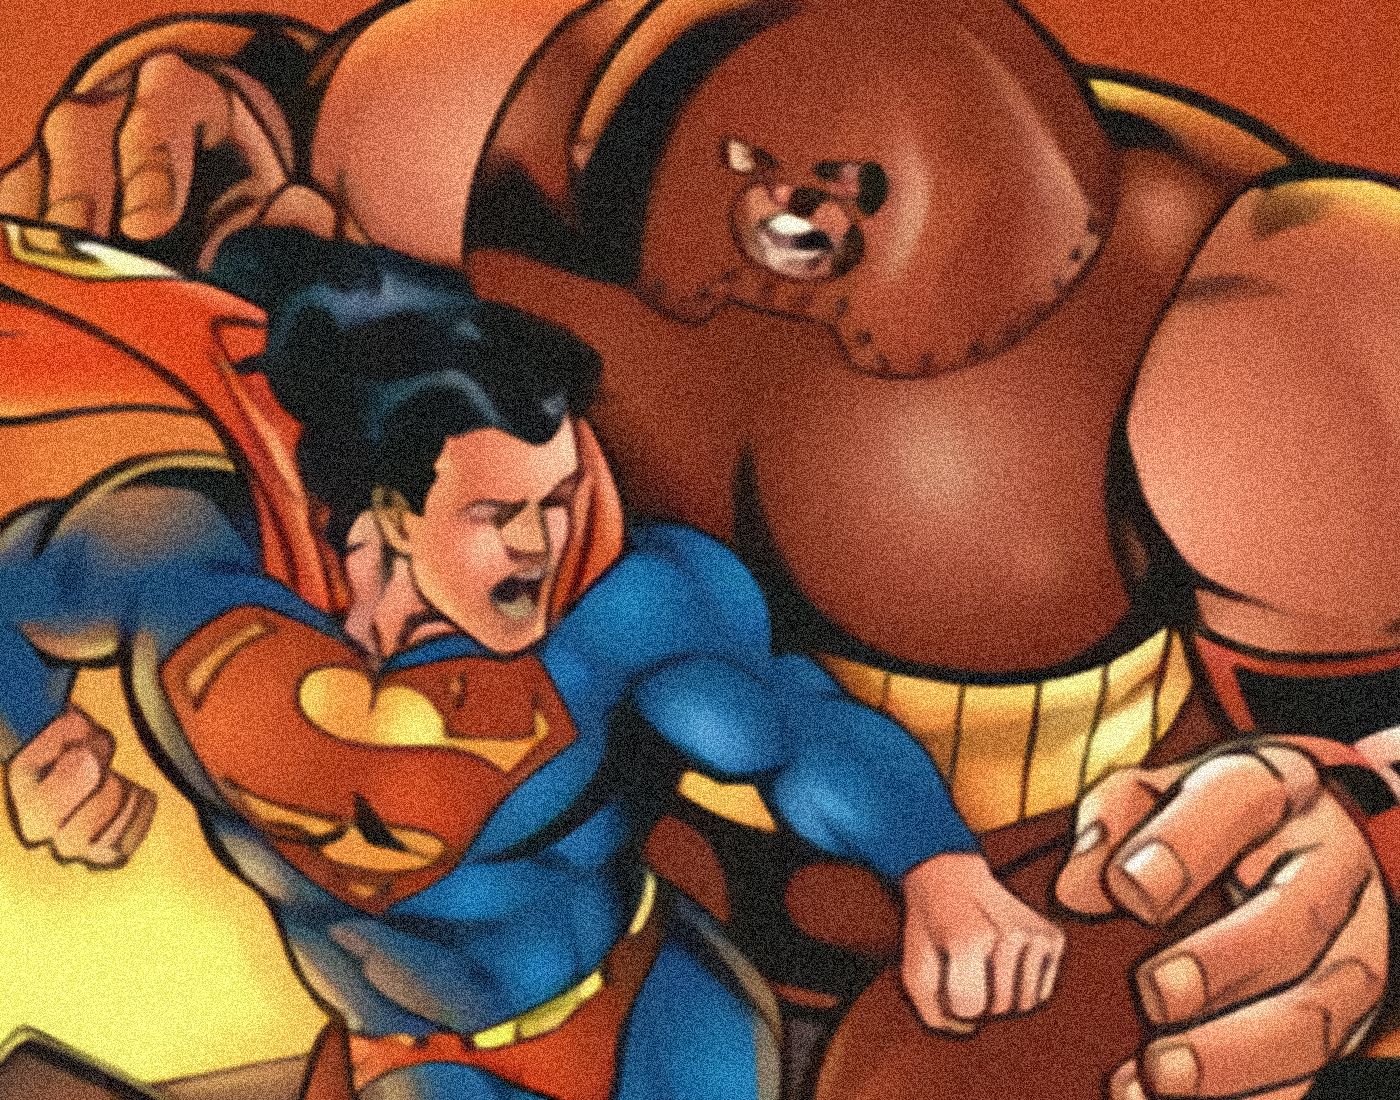 Superman vs Juggernaut